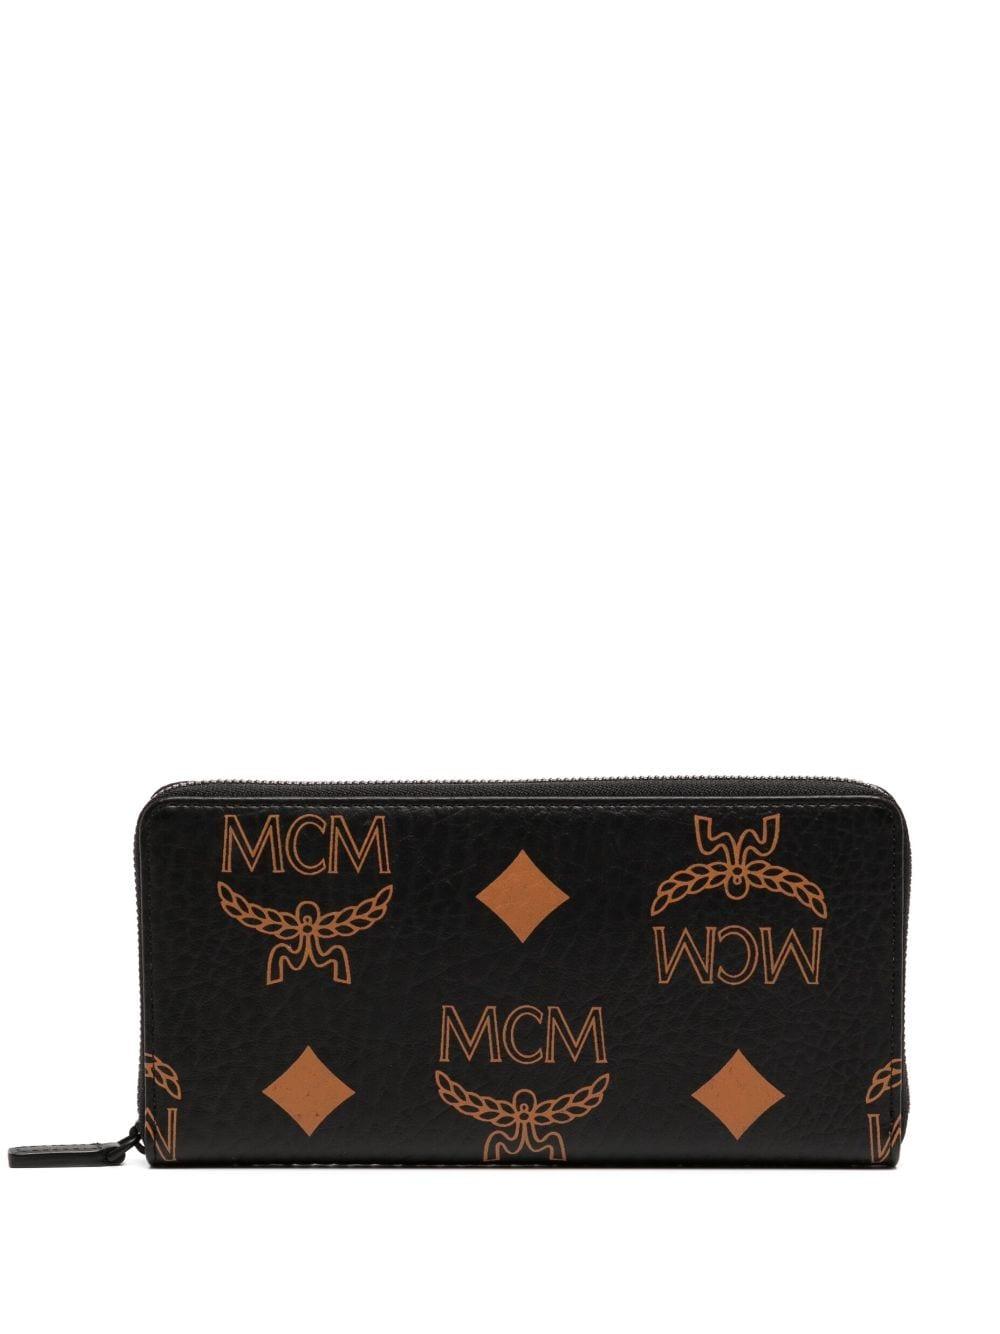 MCM Large Maxi Visetos Zip-around Wallet in Black | Lyst